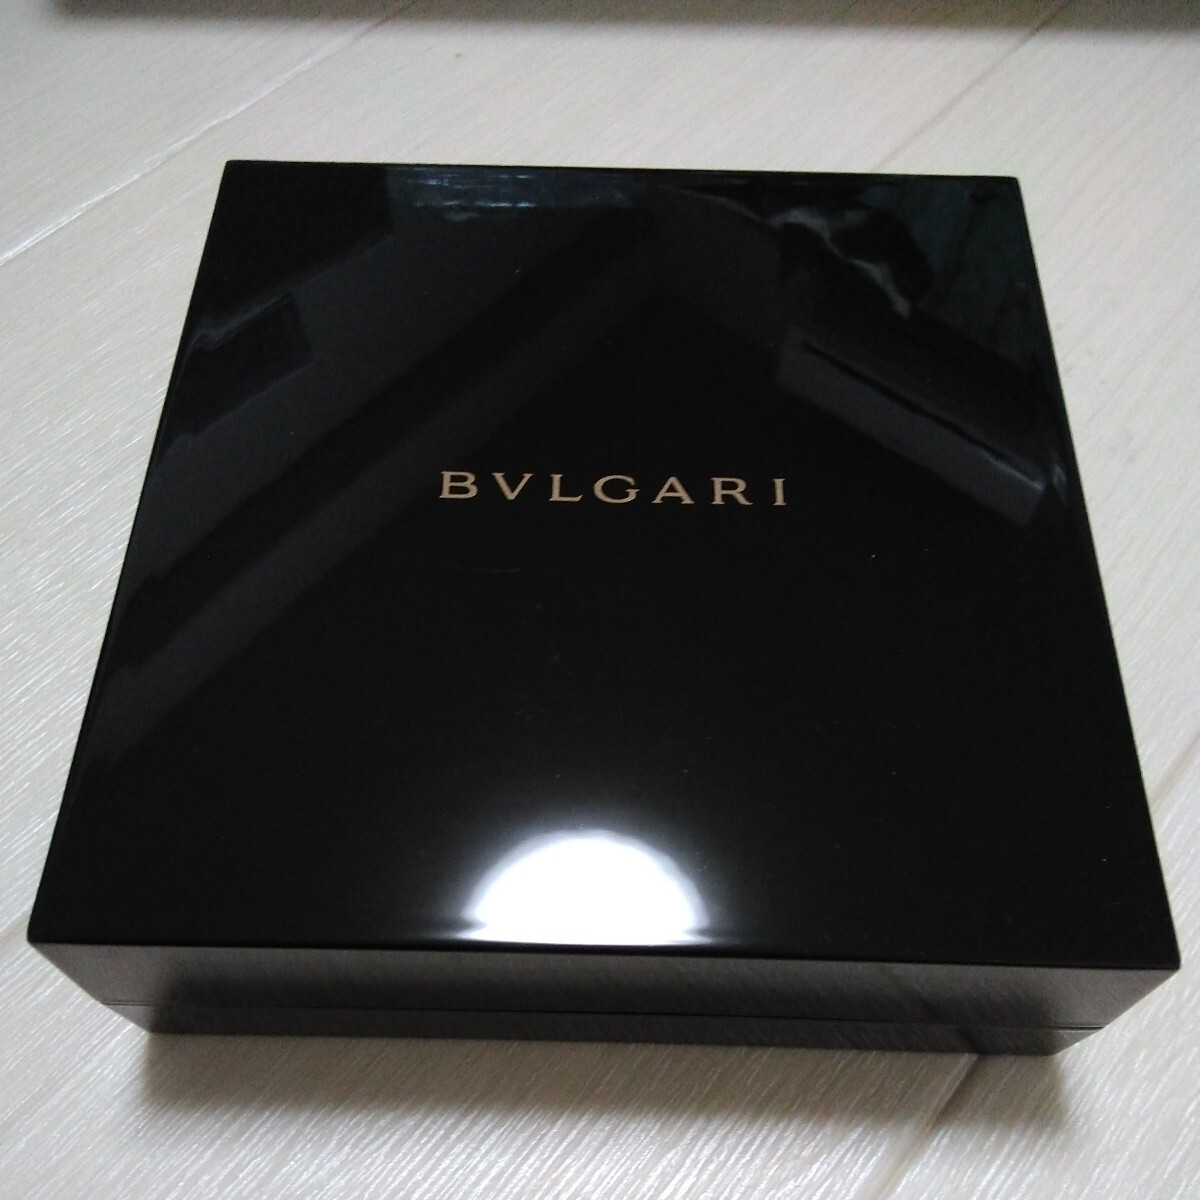  BVLGARY BVLGARI empty box necklace case 